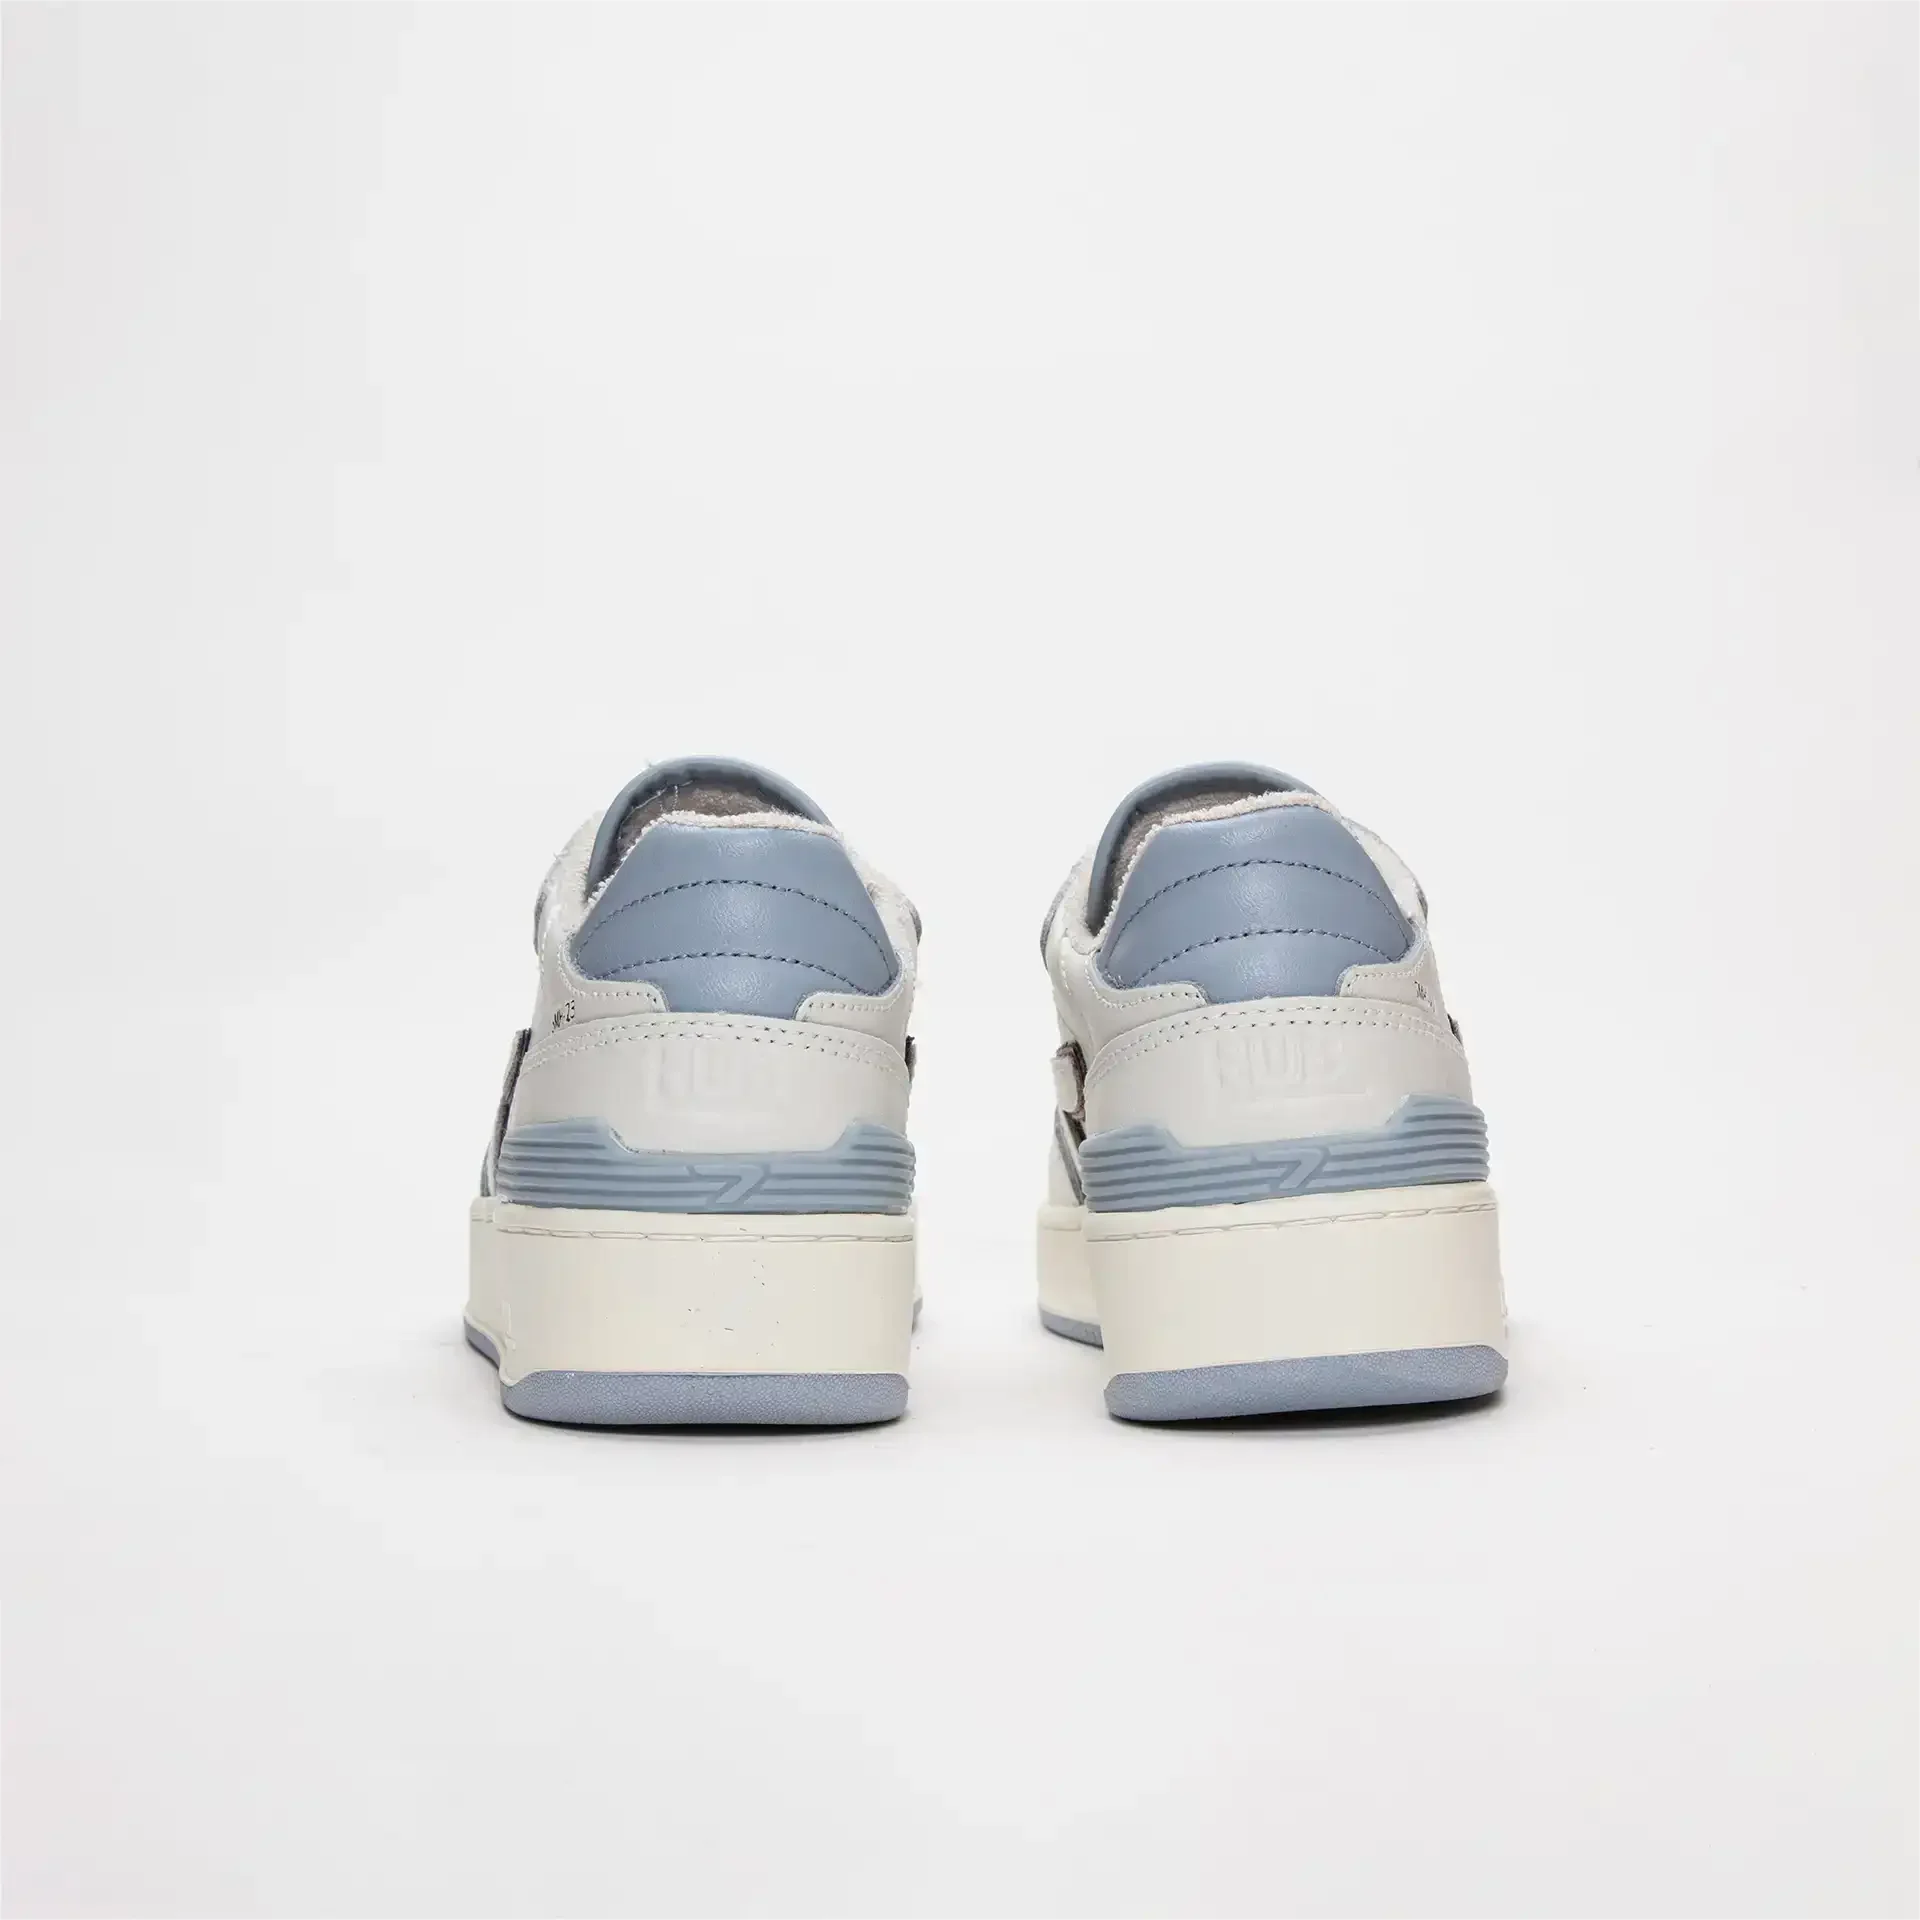 HUB Footwear Smash Sneakers Off White/Gravel/Light Blue